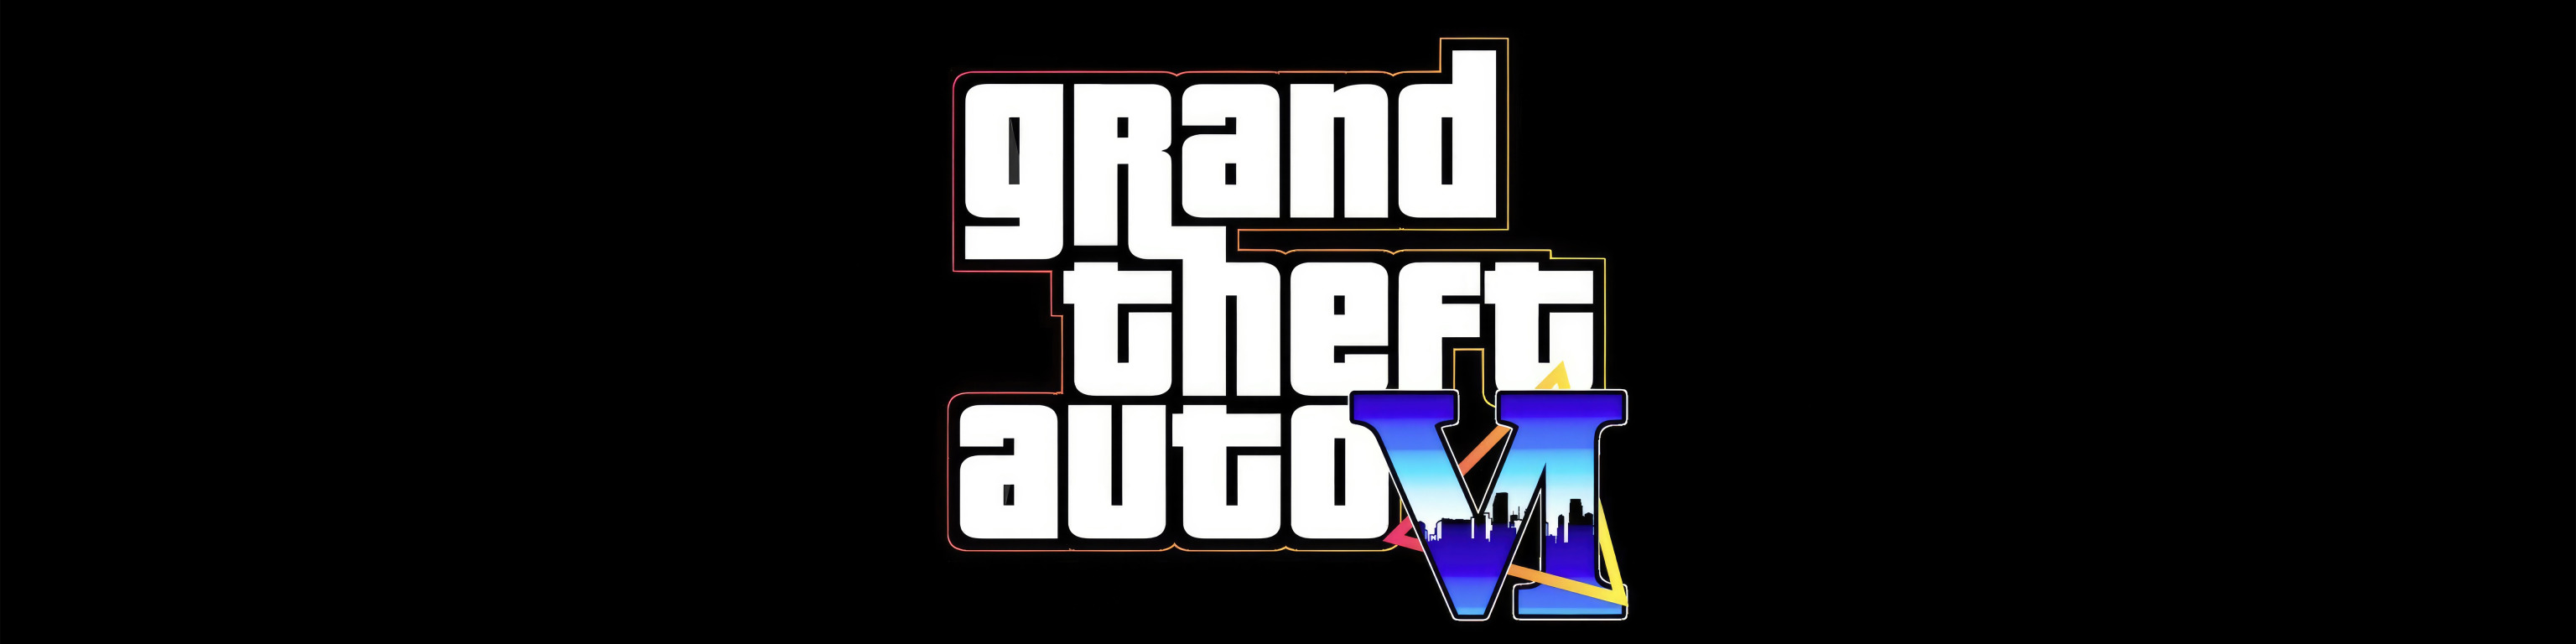 Download wallpaper logo, logo, GTA 6, GTA VI, Grand Theft Auto VI, GTA ...